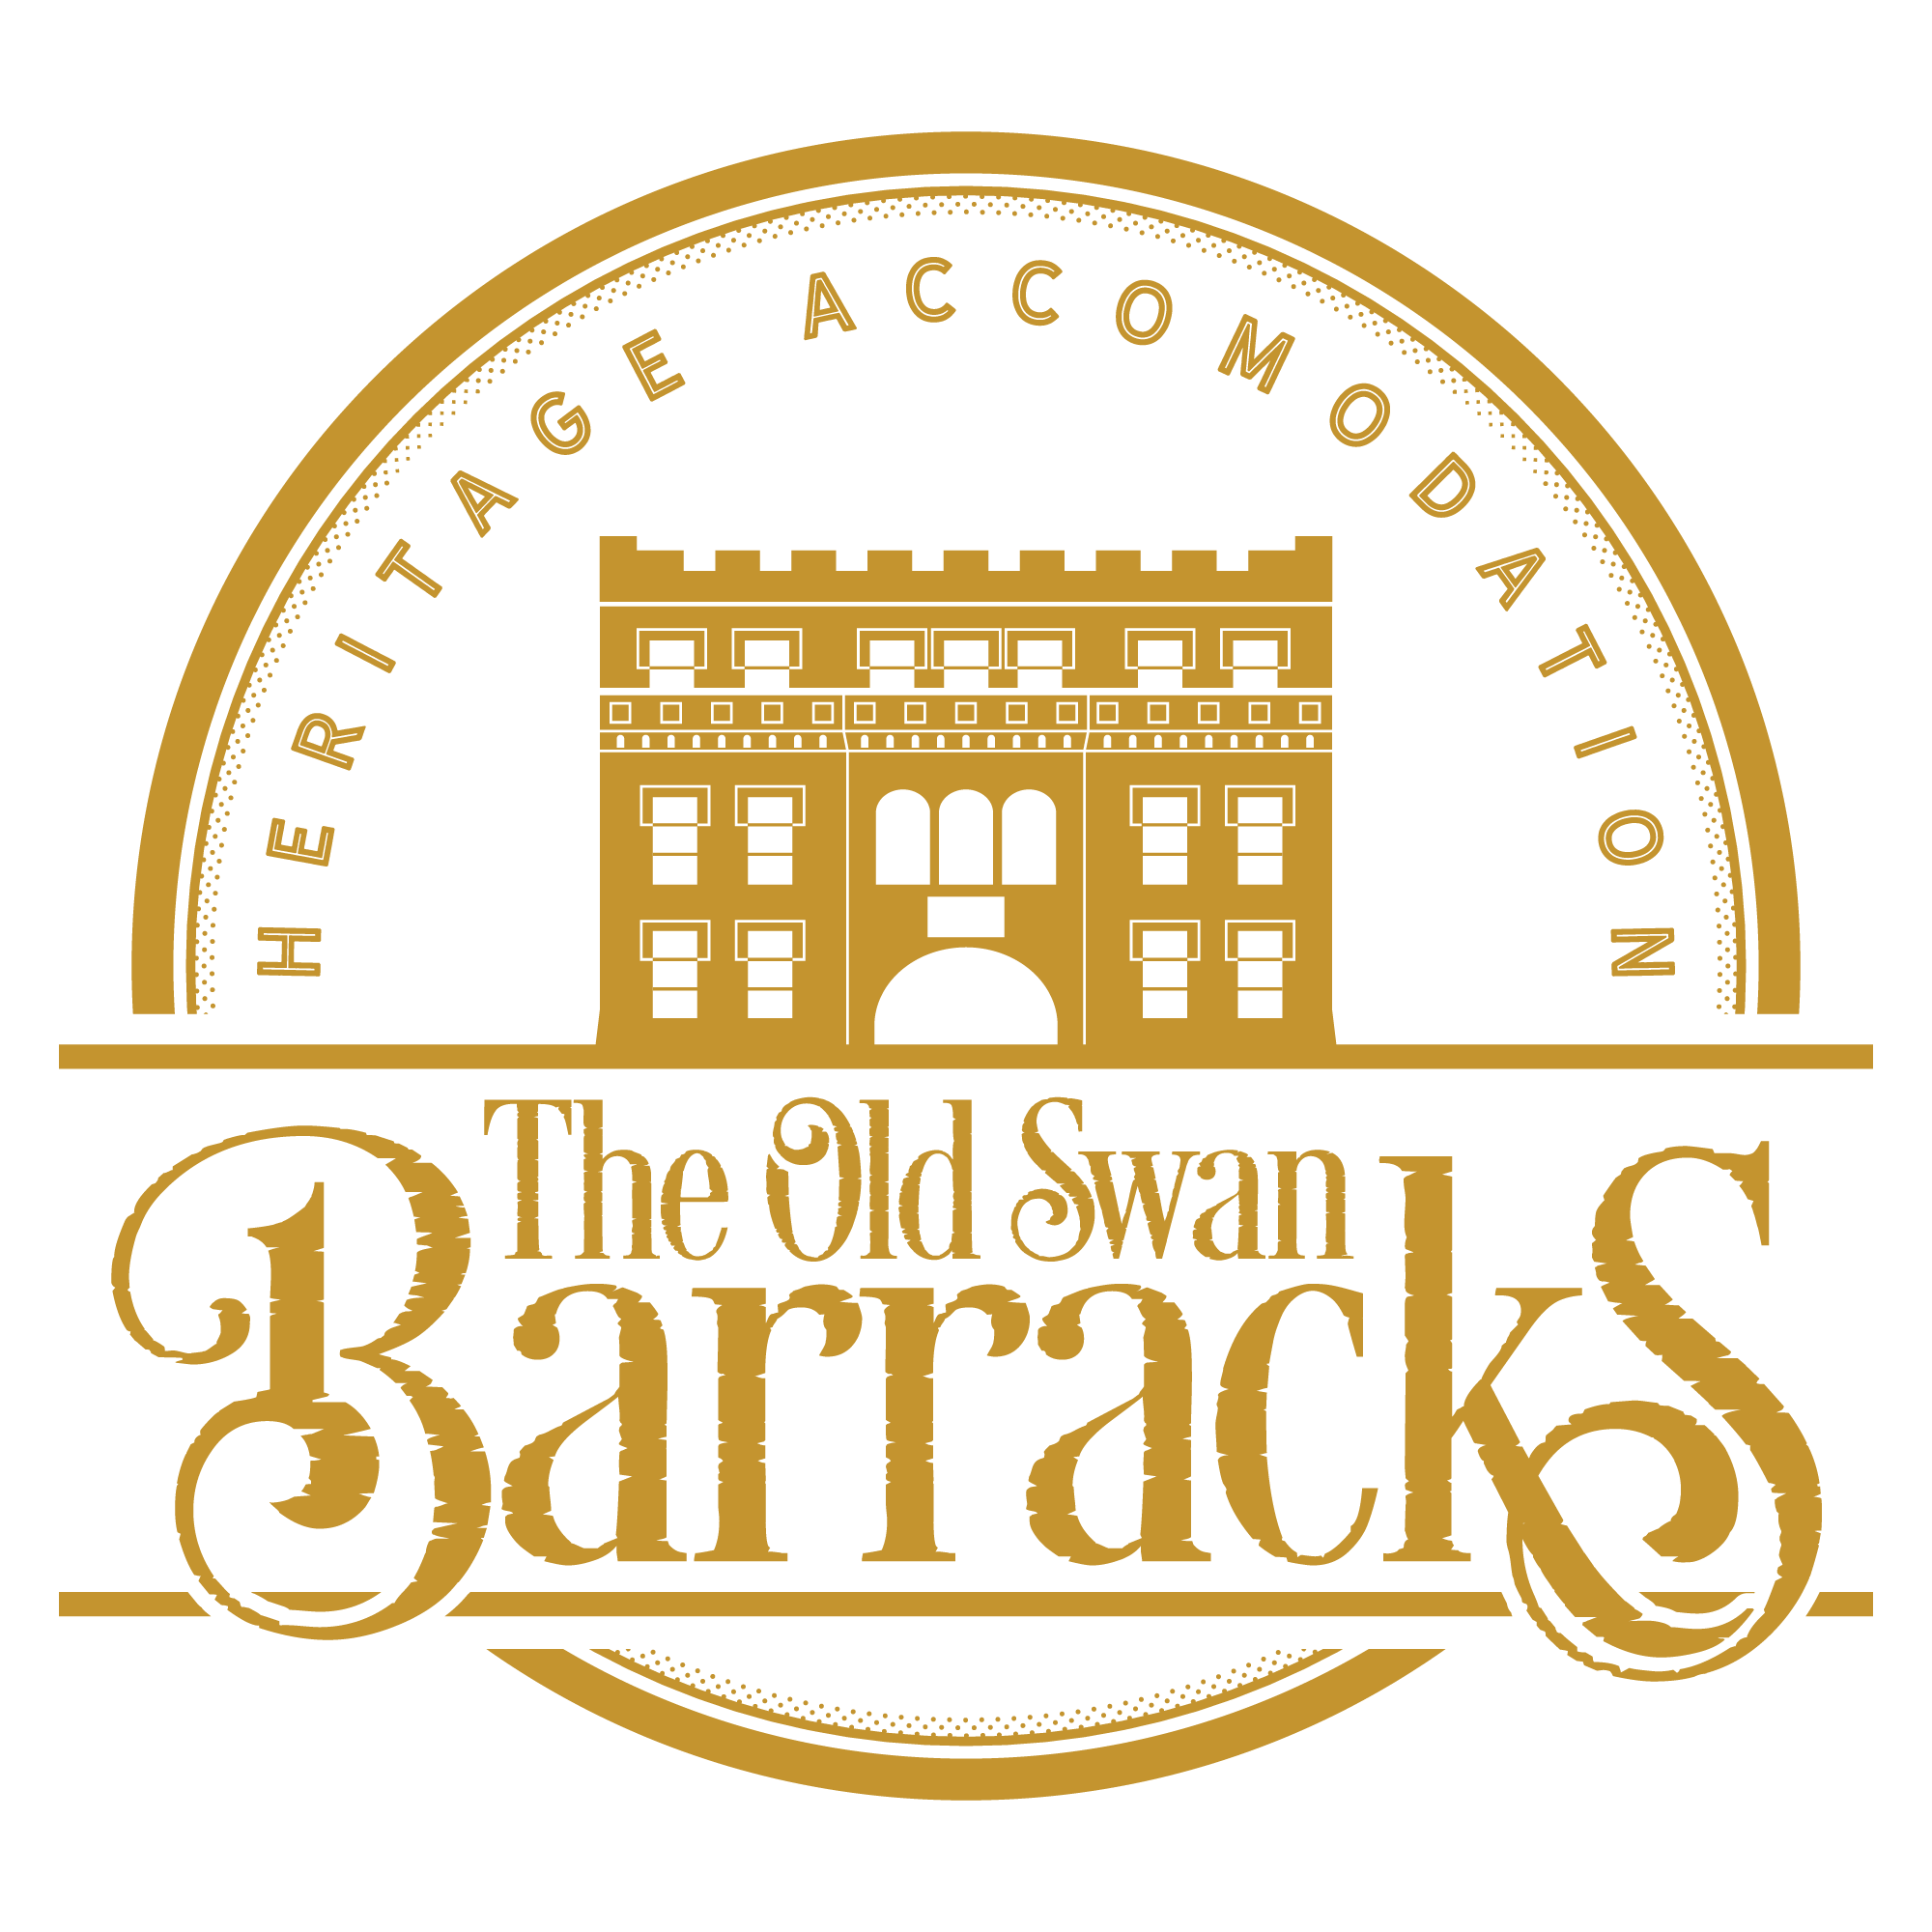 The Old Swan Barracks